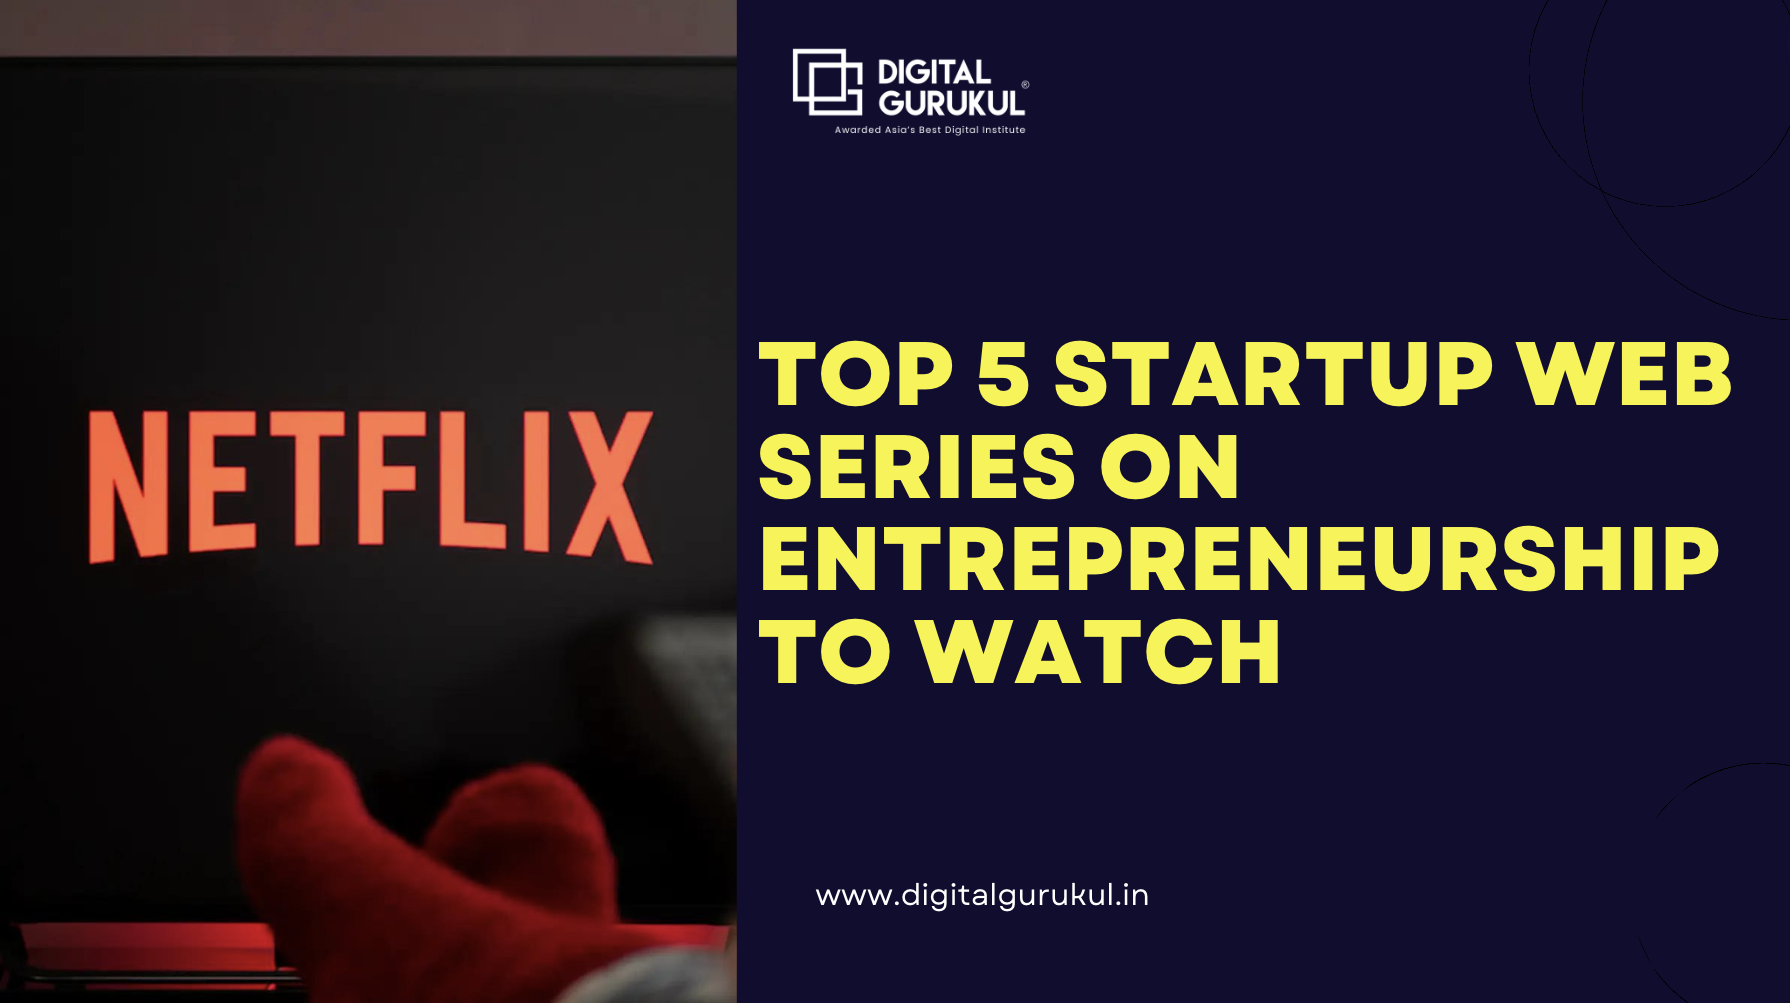 Top 5 Startup Web series on Entrepreneurship to watch